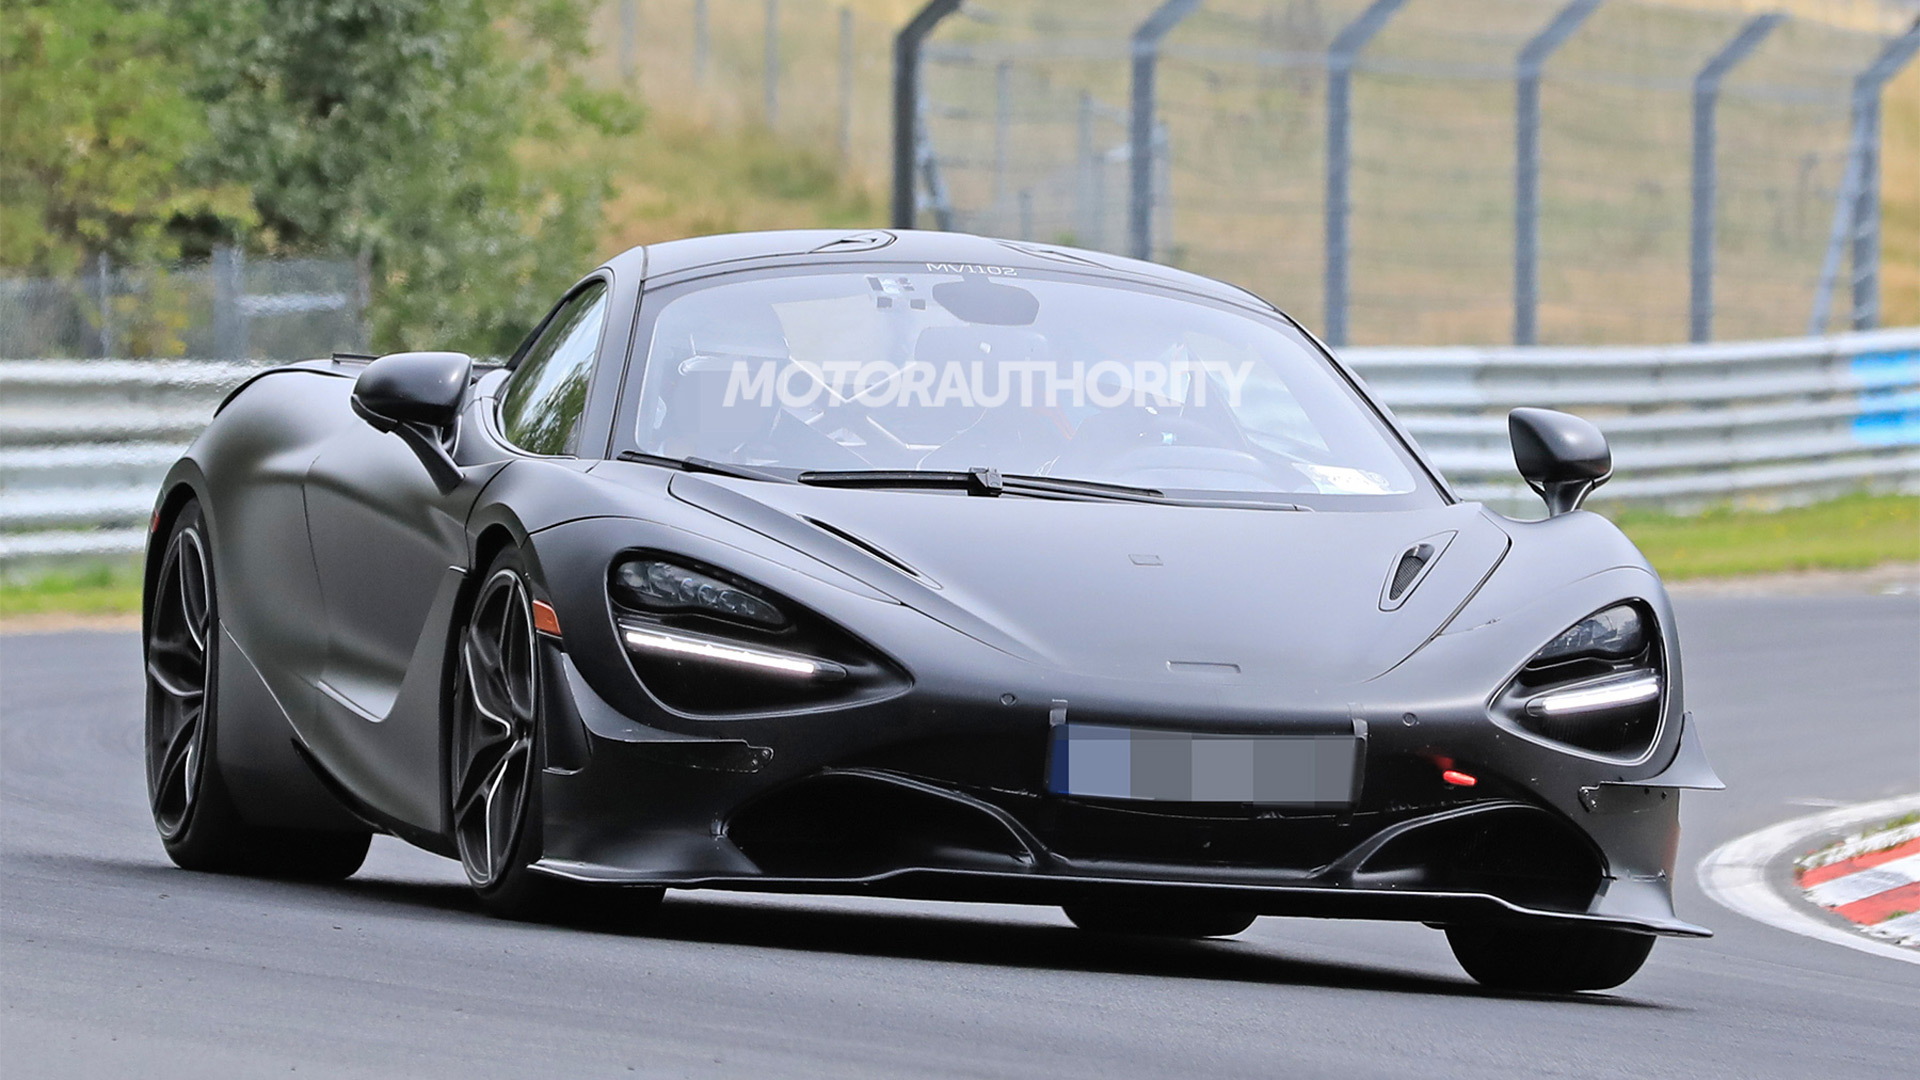 2021 McLaren 750LT test mule spy shots - Photo credit: S. Baldauf/SB-Medien